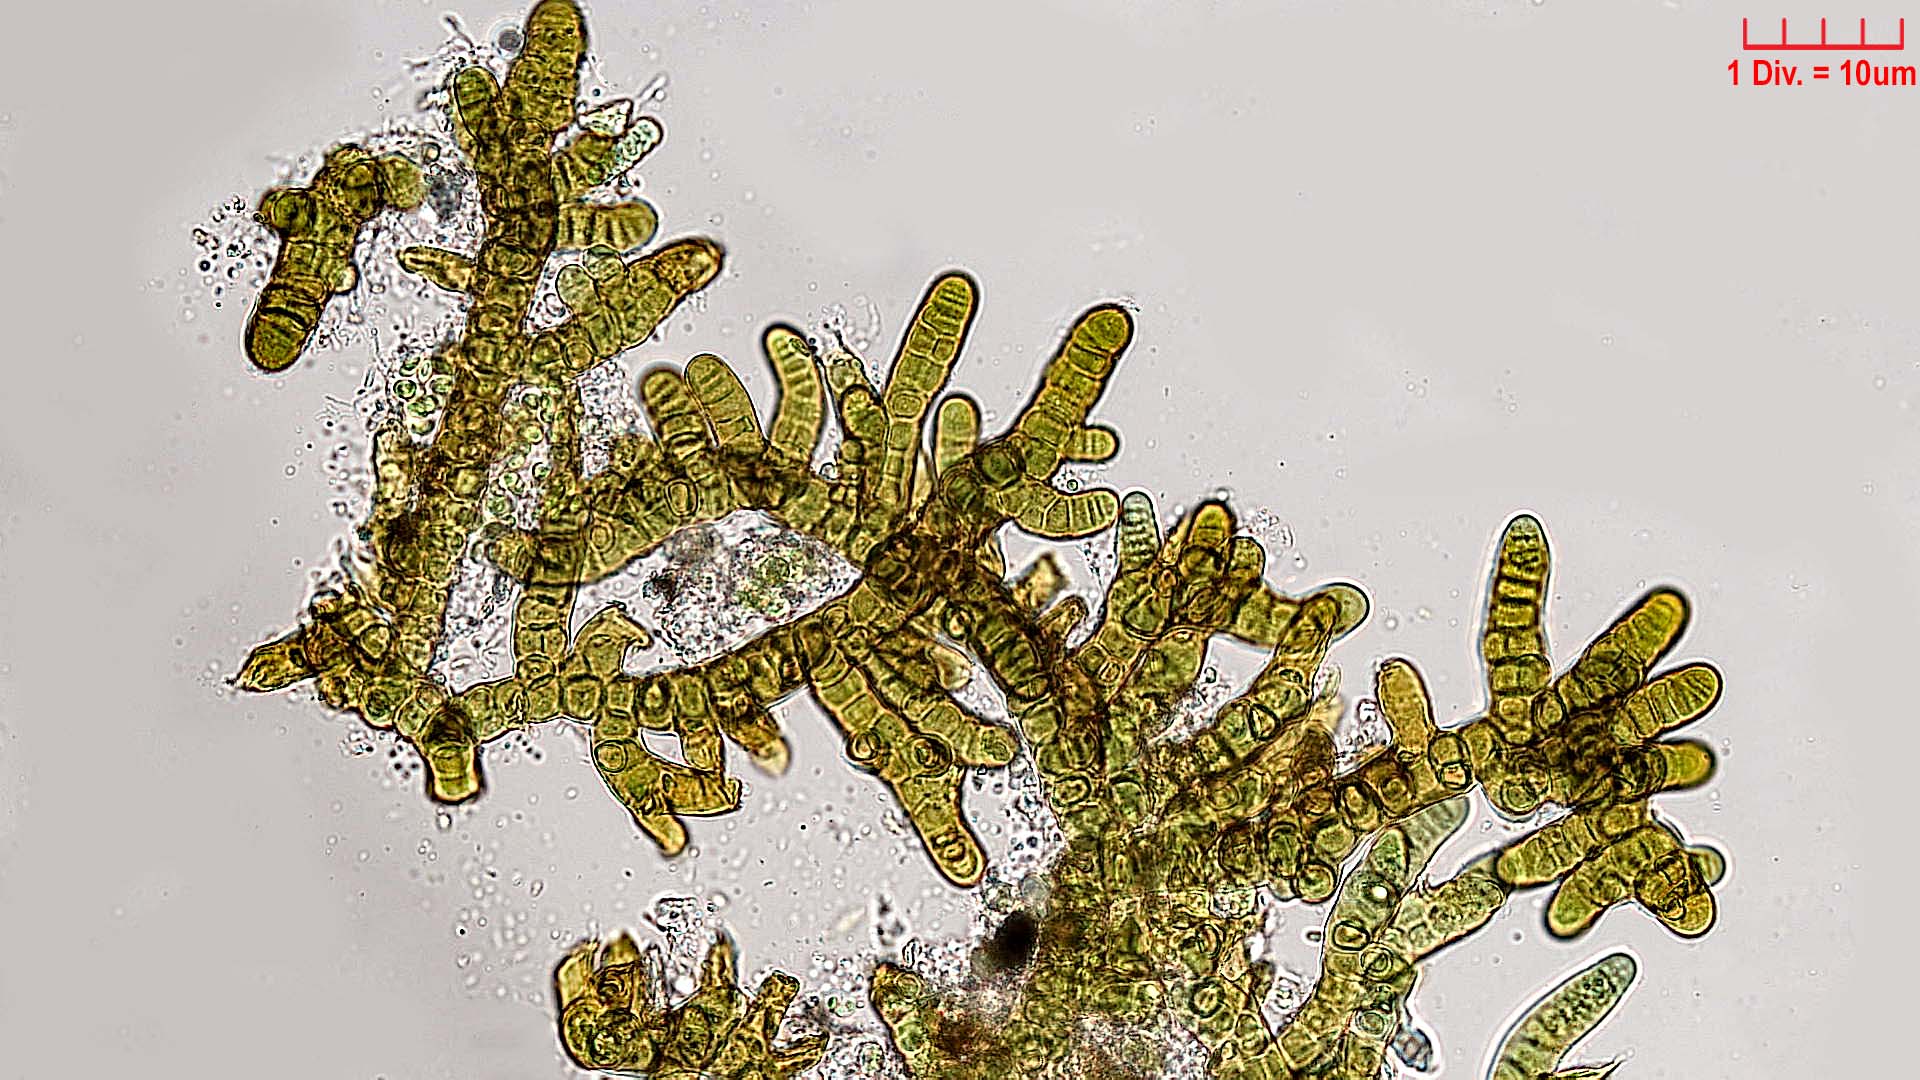 Cyanobacteria/Nostocales/Stigonemataceae/Stigonema/minutum/stigonema-minutum-533.jpg